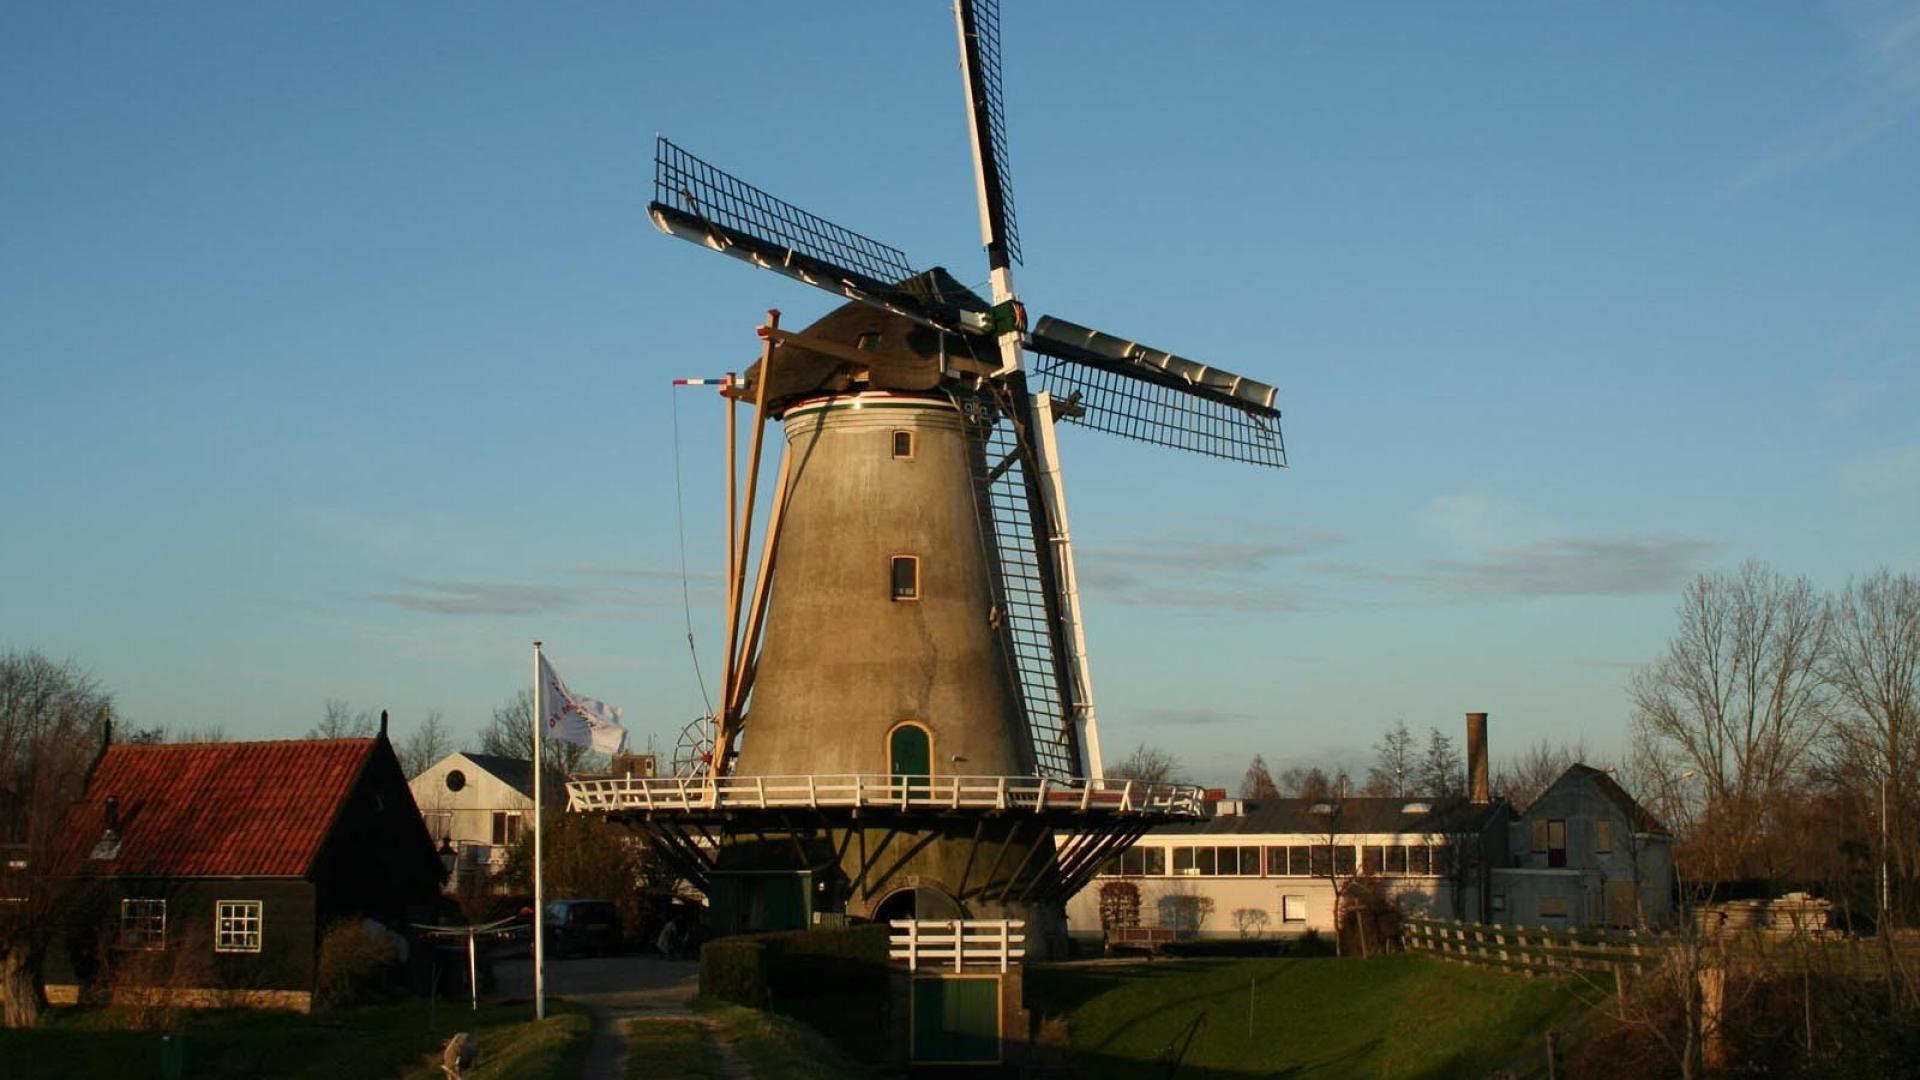 Земля ветряных мельниц. Ветряная мельница Нидерланды. Ветряные мельницы в Голландии в поле. Ветряные мельницы Киндердейка Нидерланды. Символ Голландии Ветряные мельницы.